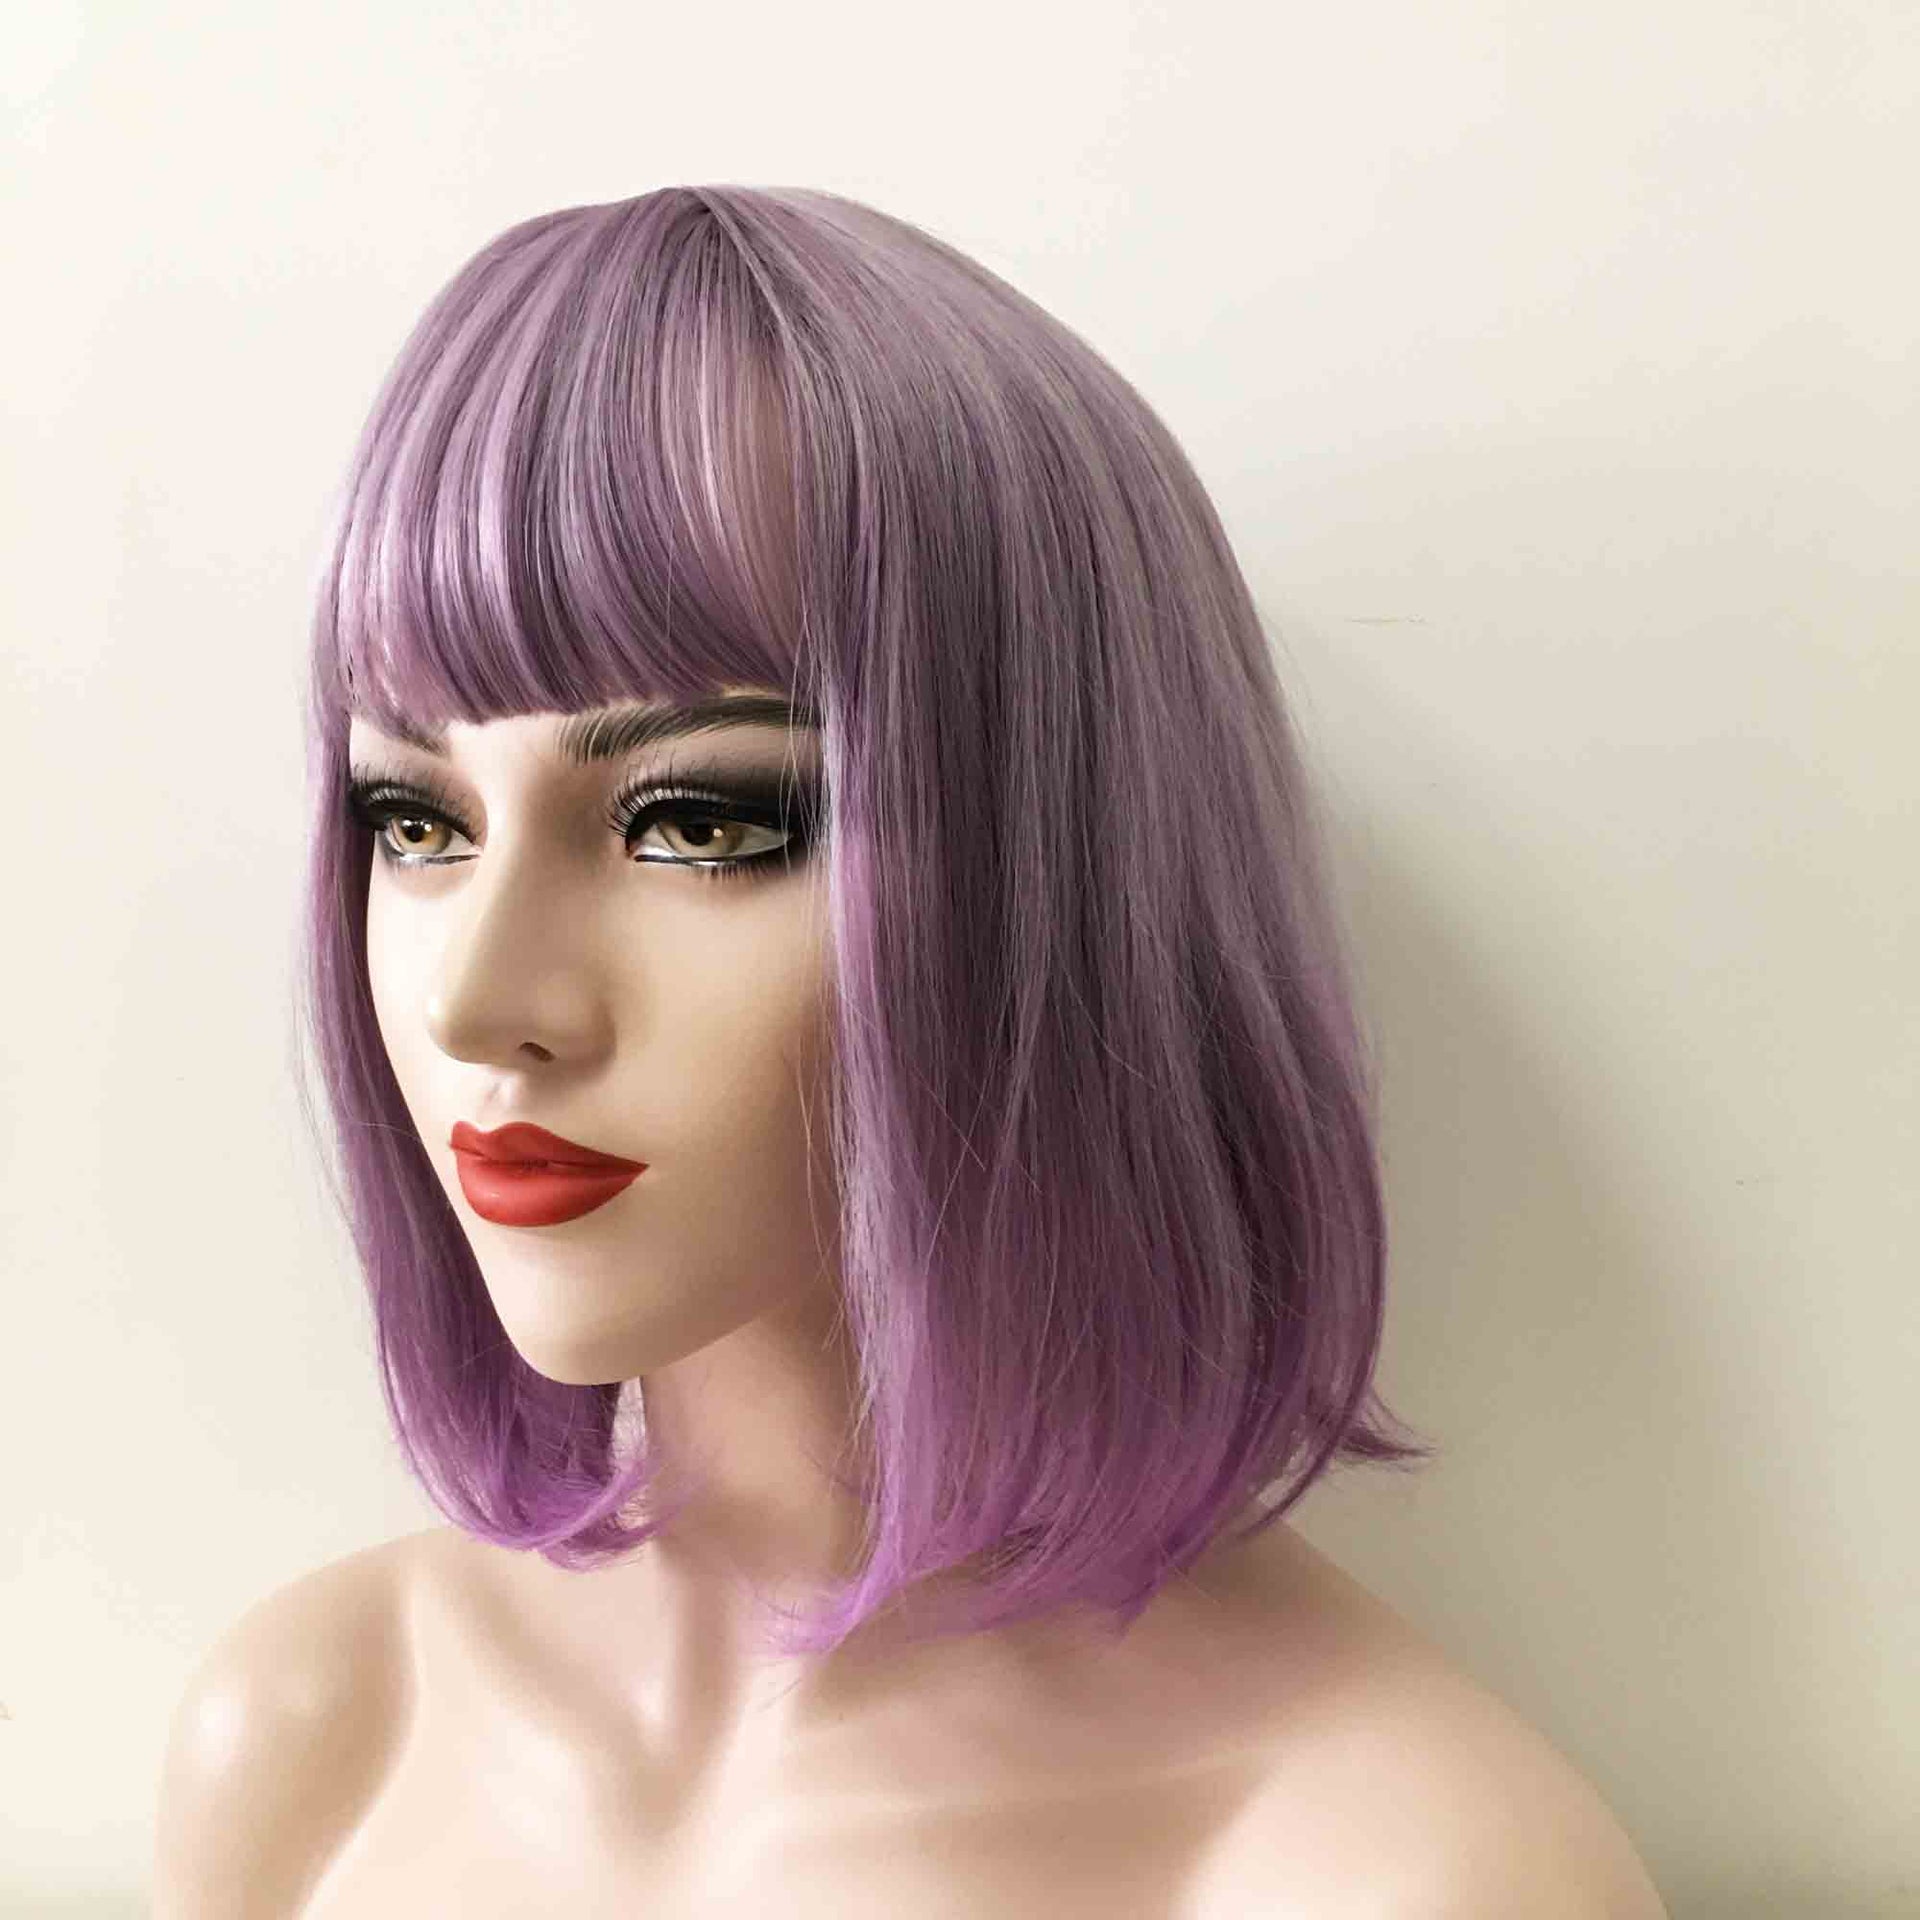 nevermindyrhead Women Purple Grey Ombre Short Straight Bob Fringe Bangs Wig